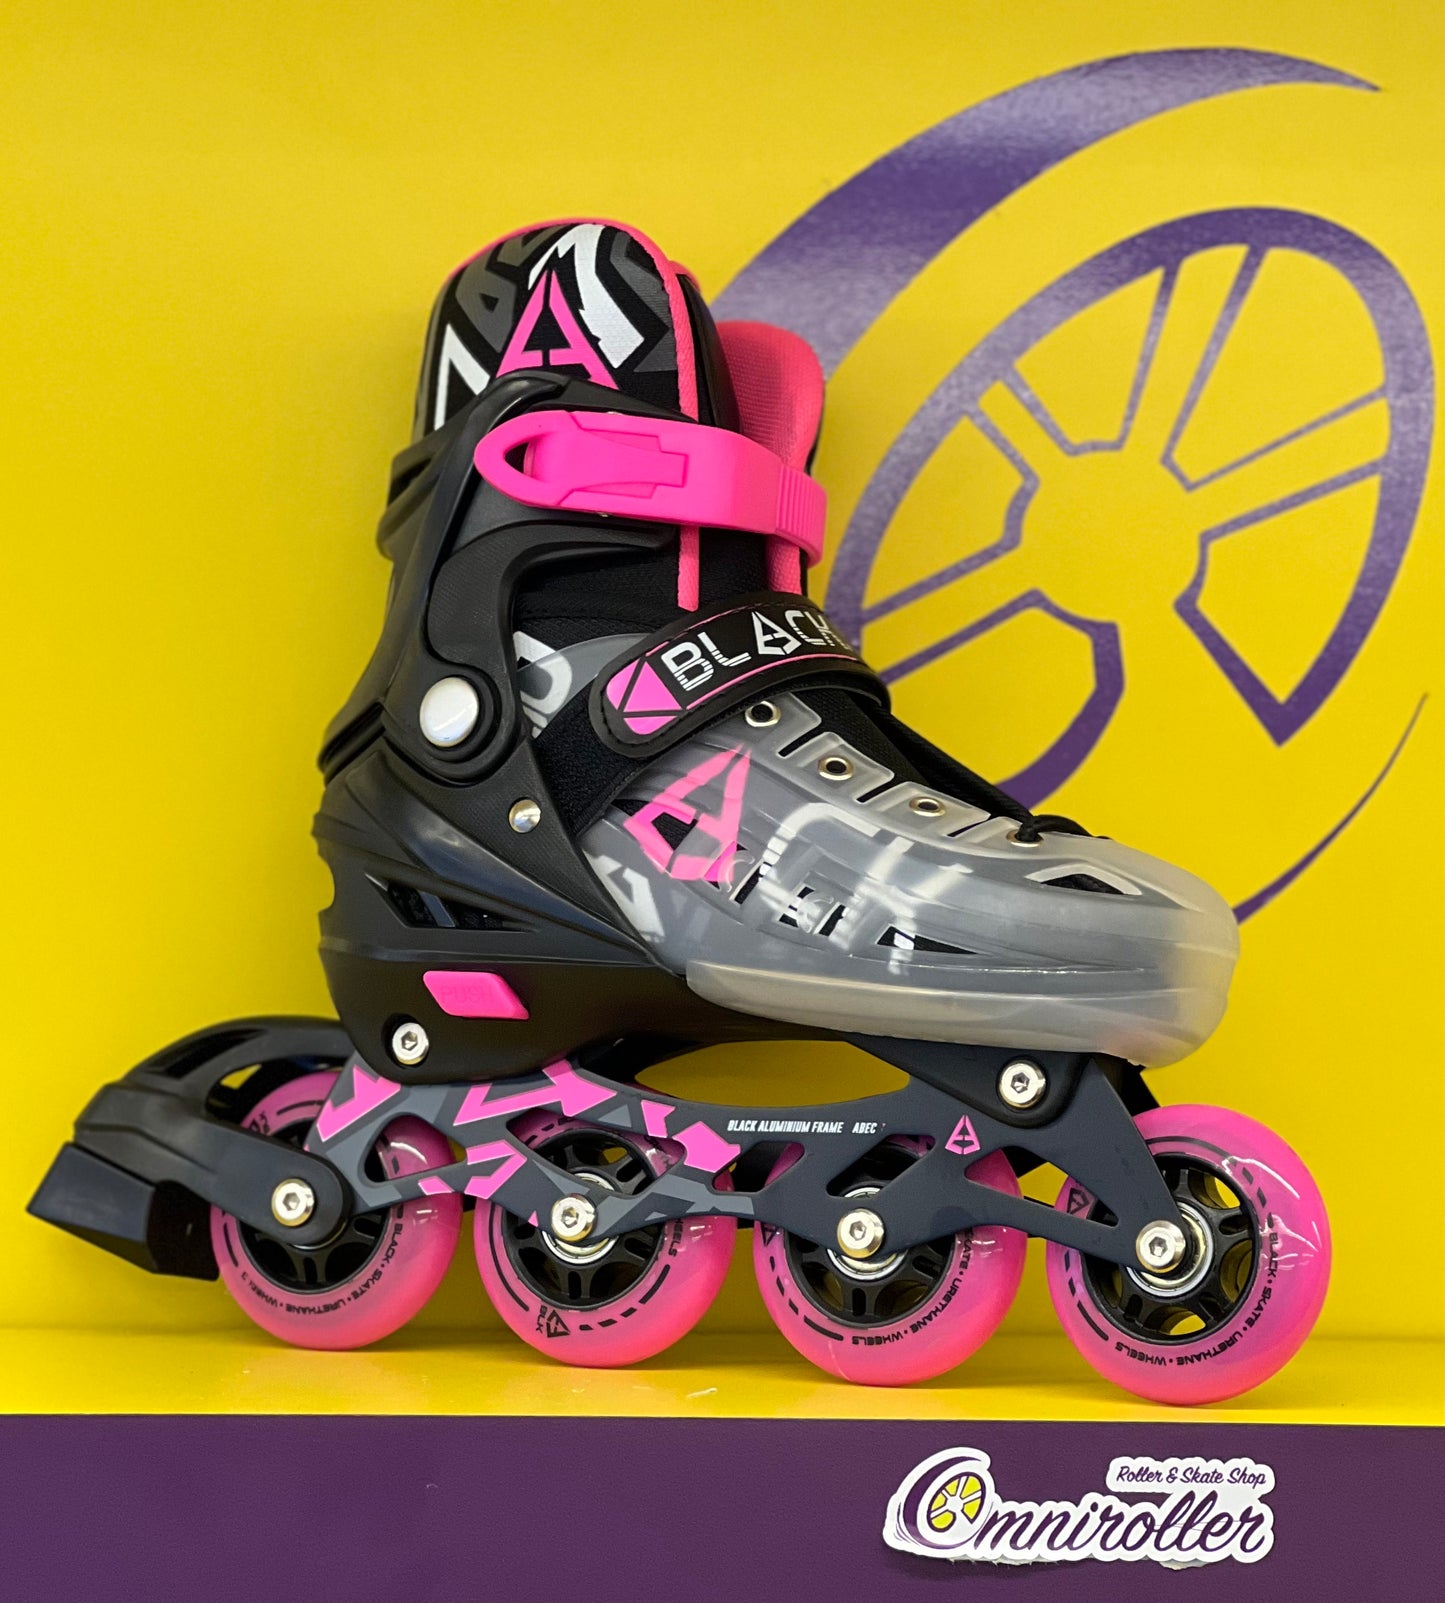 Kit de patines Fitness con protecciones Black Kids Rosa